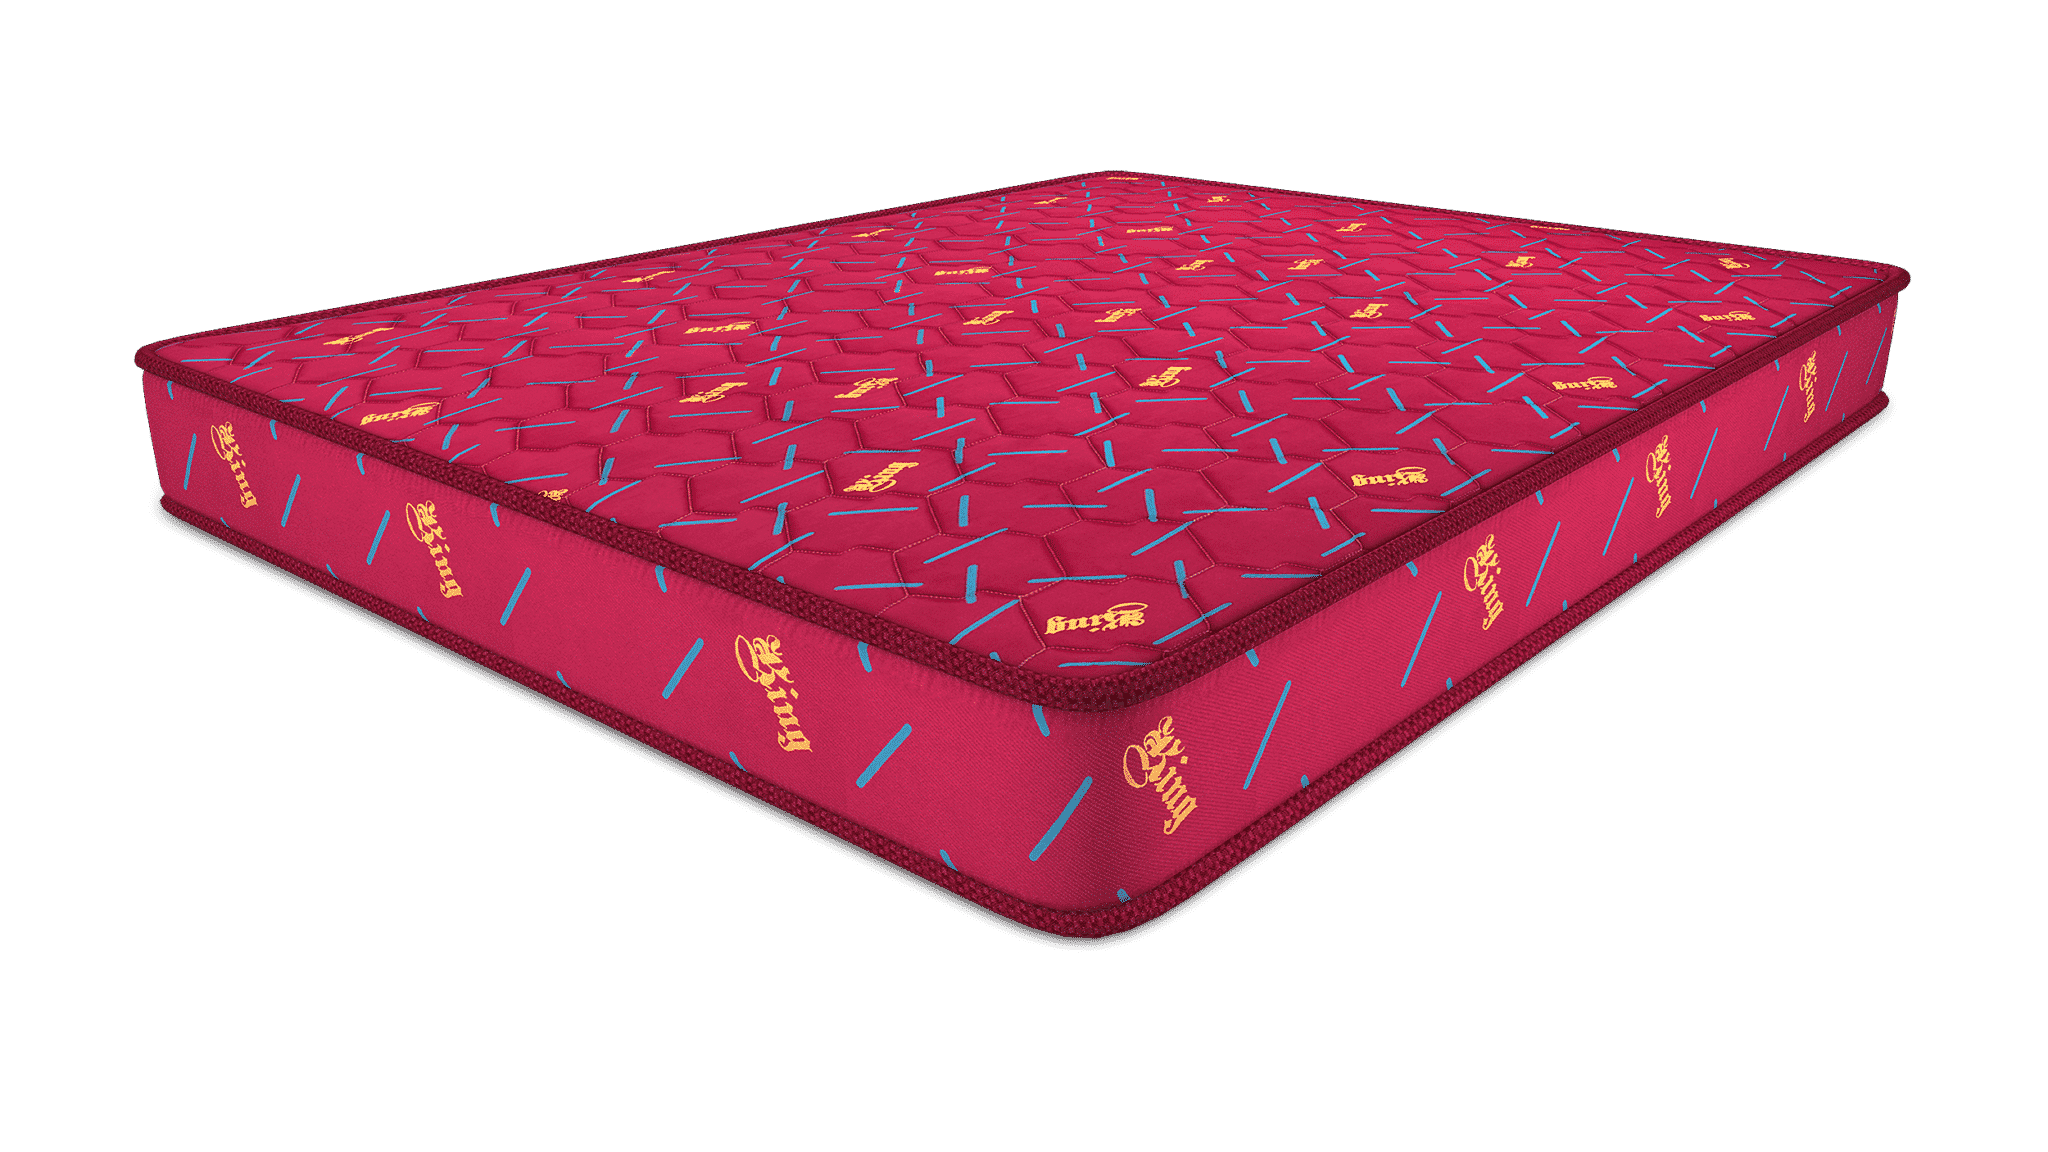 king mattress price in india